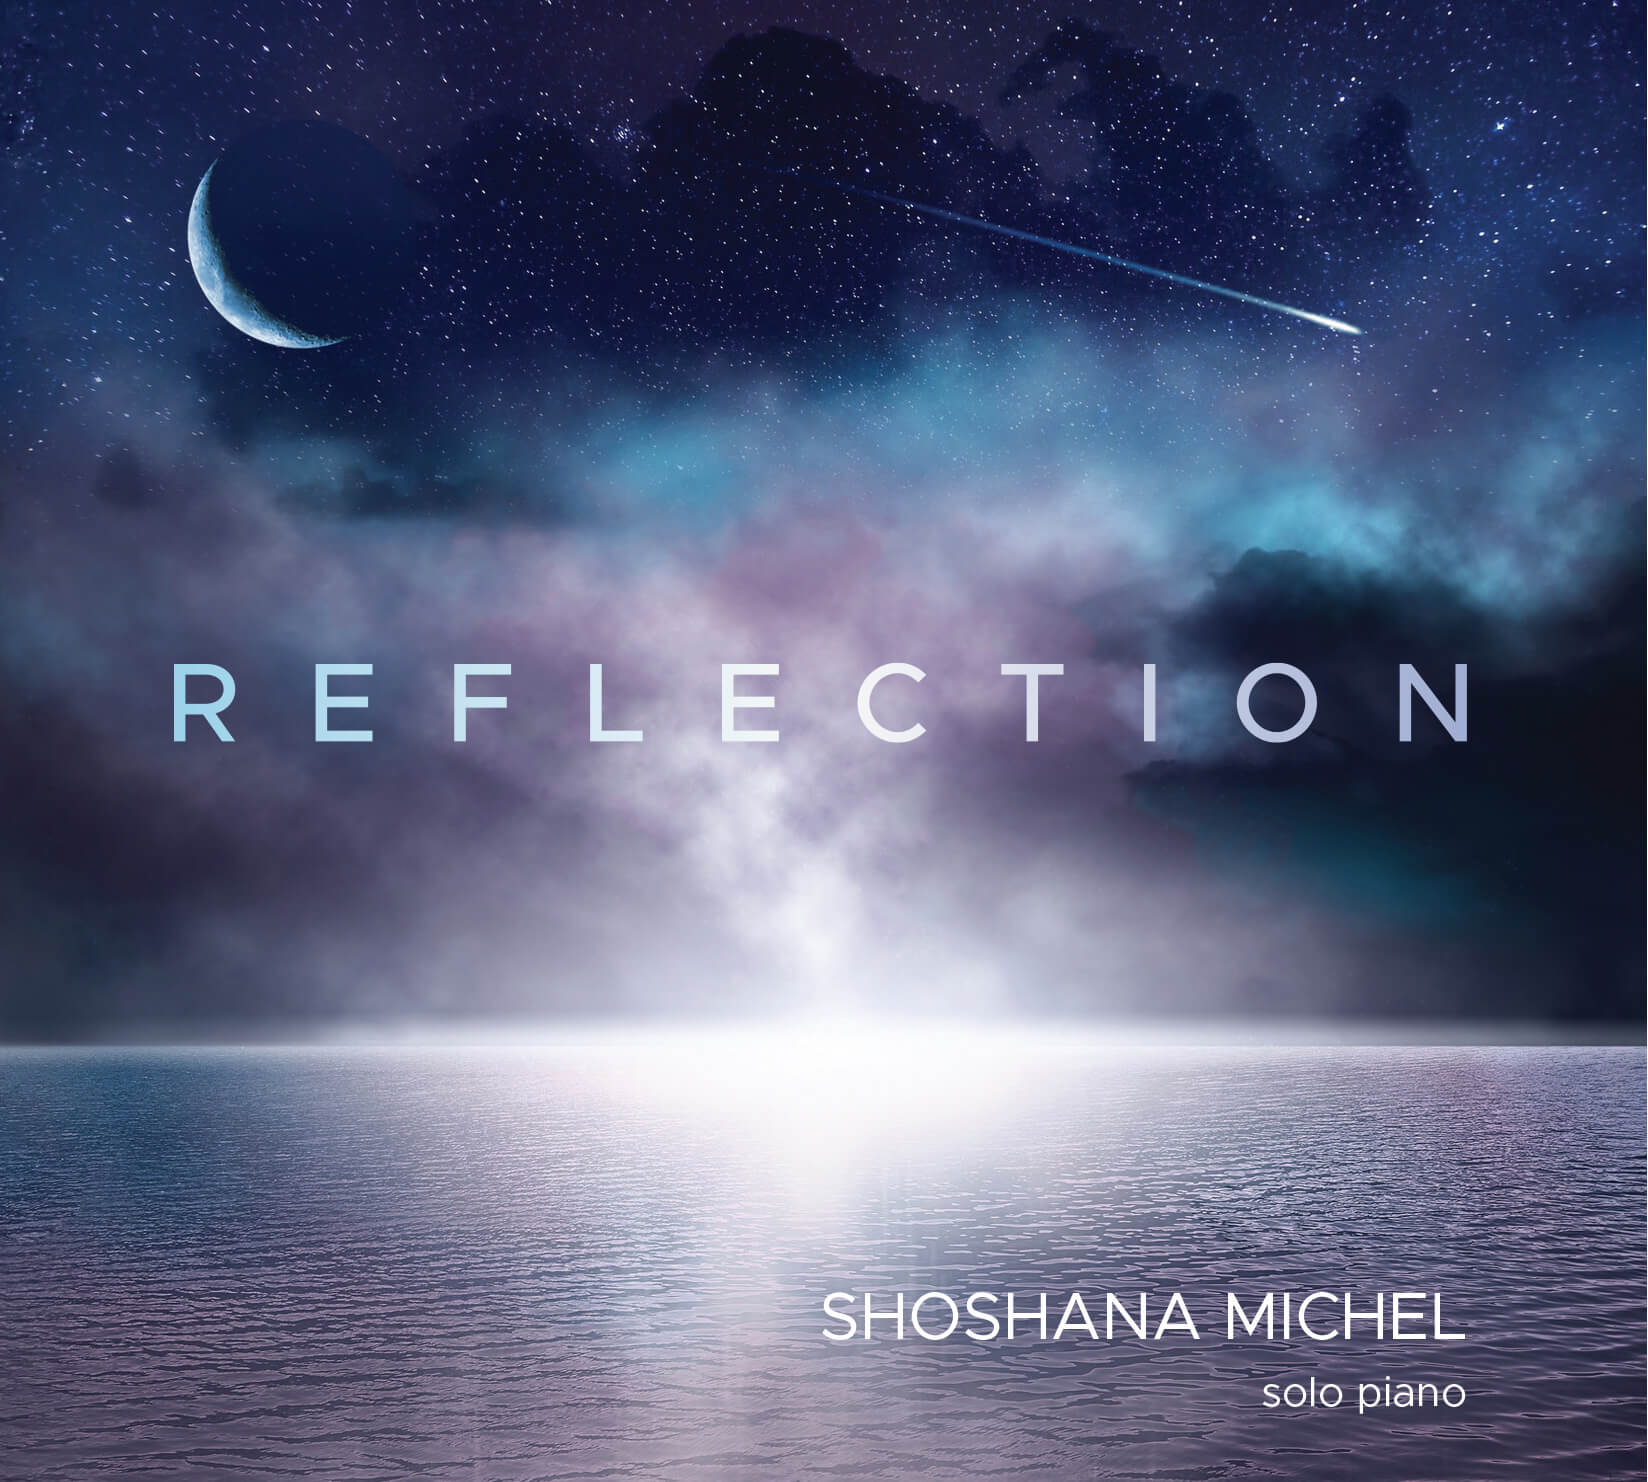 Beautiful emotional solo piano portraits Shoshana Michel